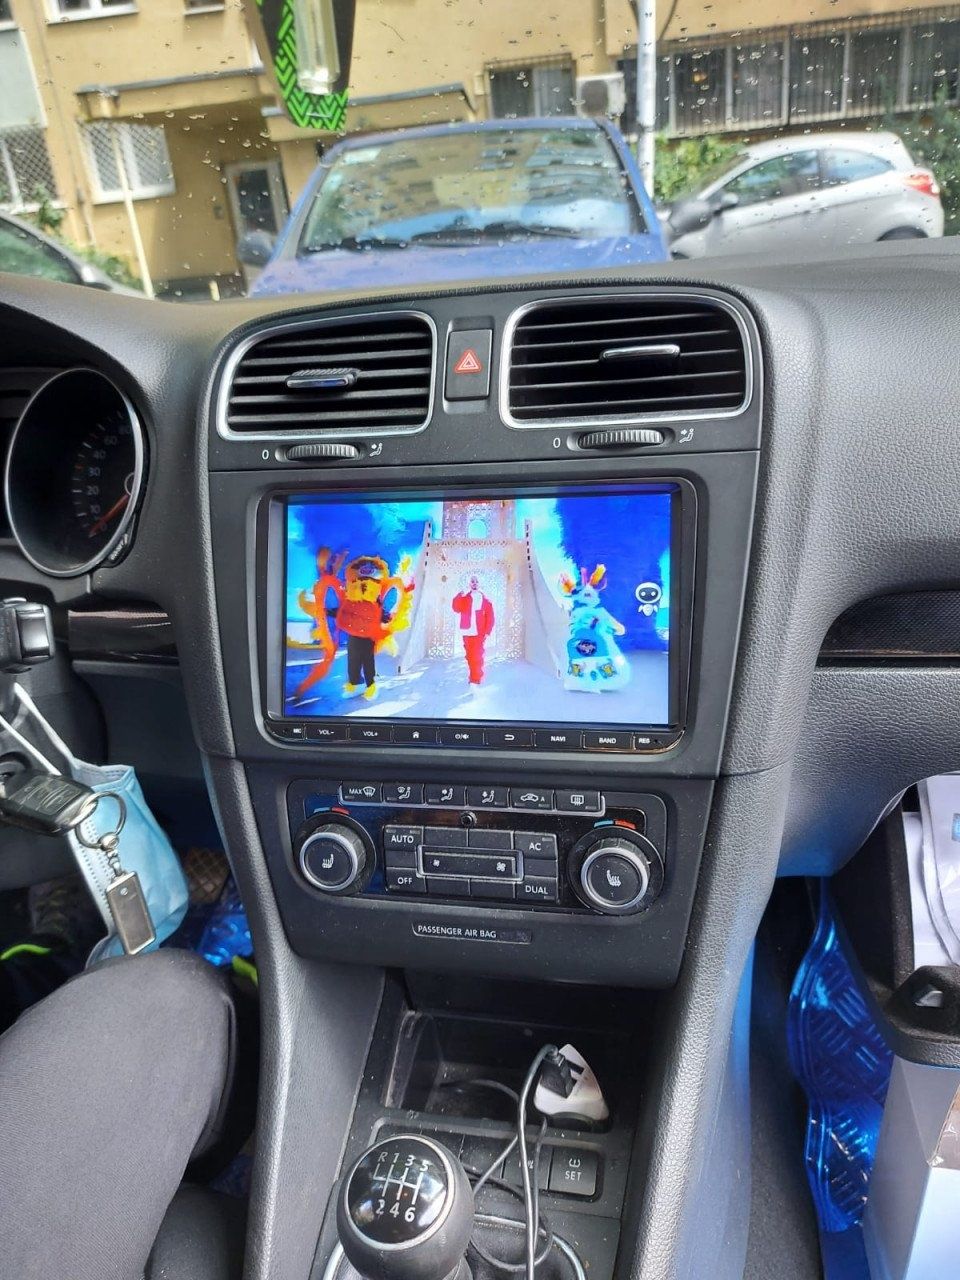 Navigatie Player Android VW Skoda Seat